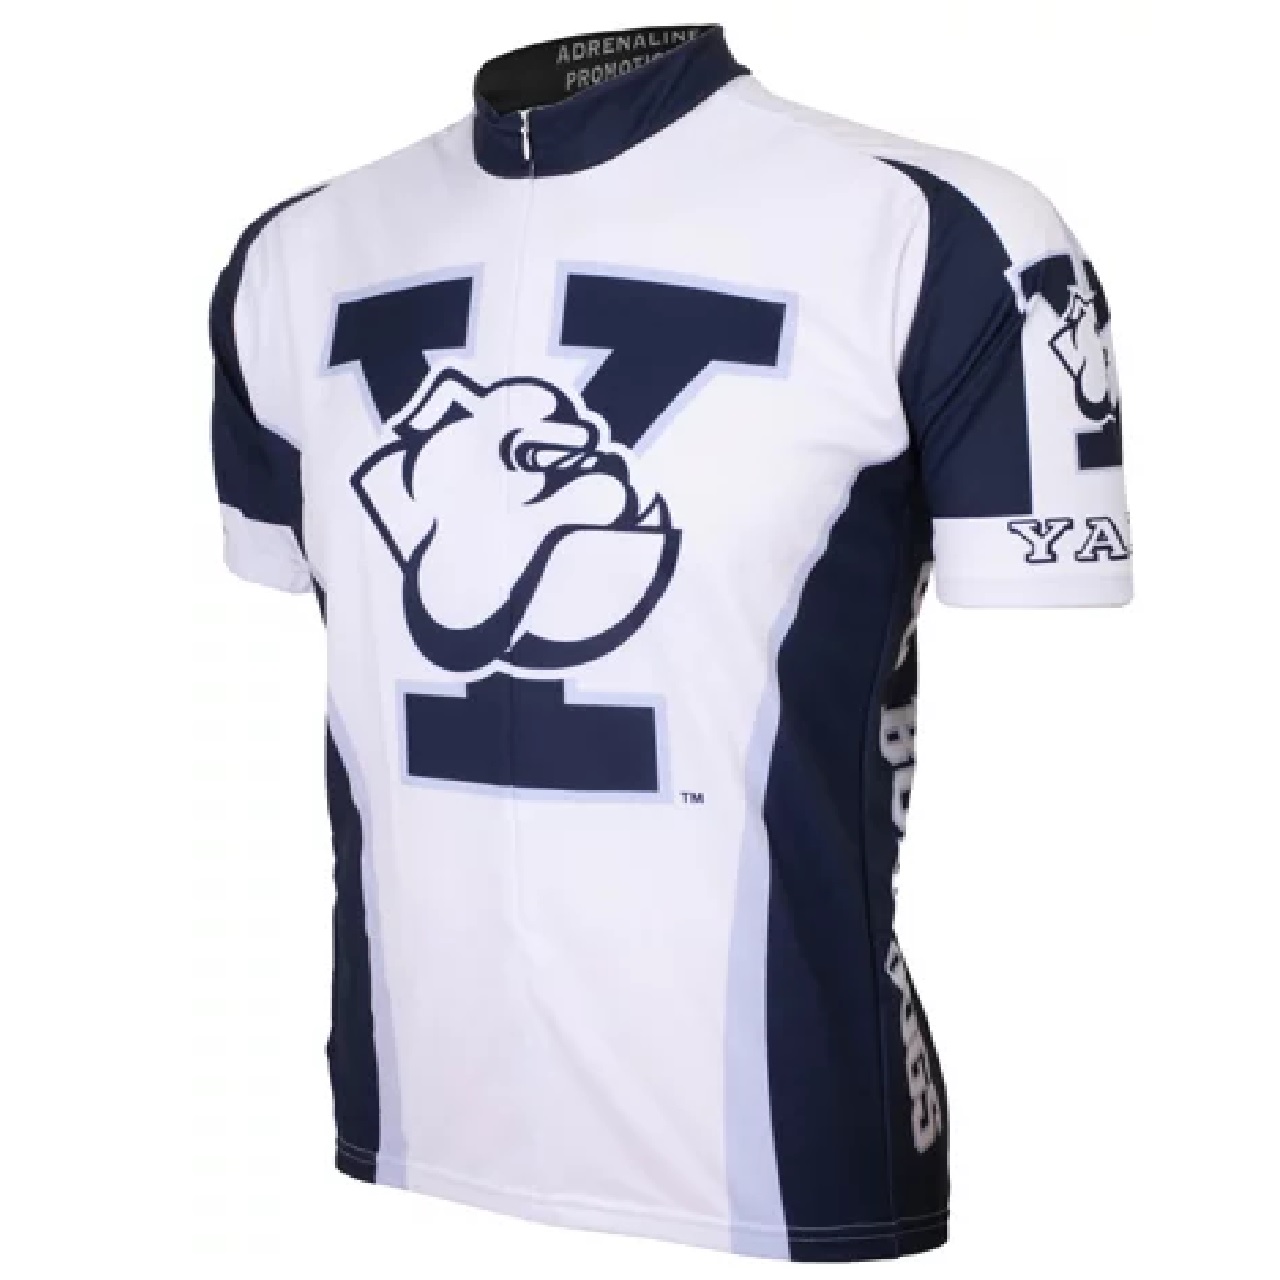 Adrenaline Promo Yale University College 3/4 zip Men's Cycling Jersey